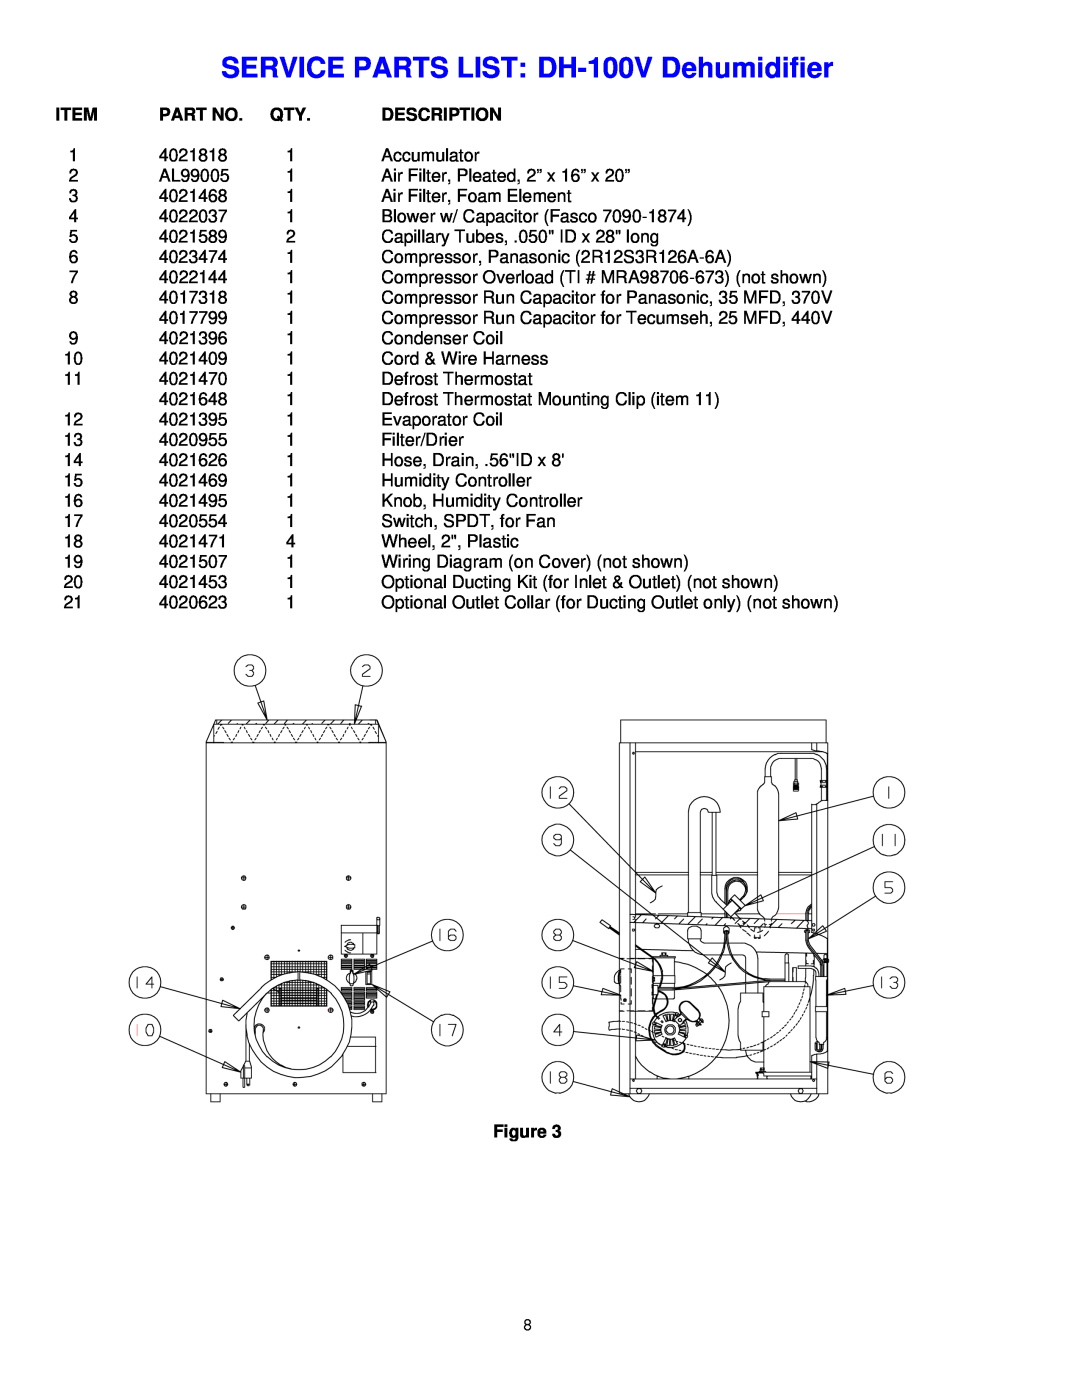 American Aldes specifications SERVICE PARTS LIST DH-100VDehumidifier, Description 